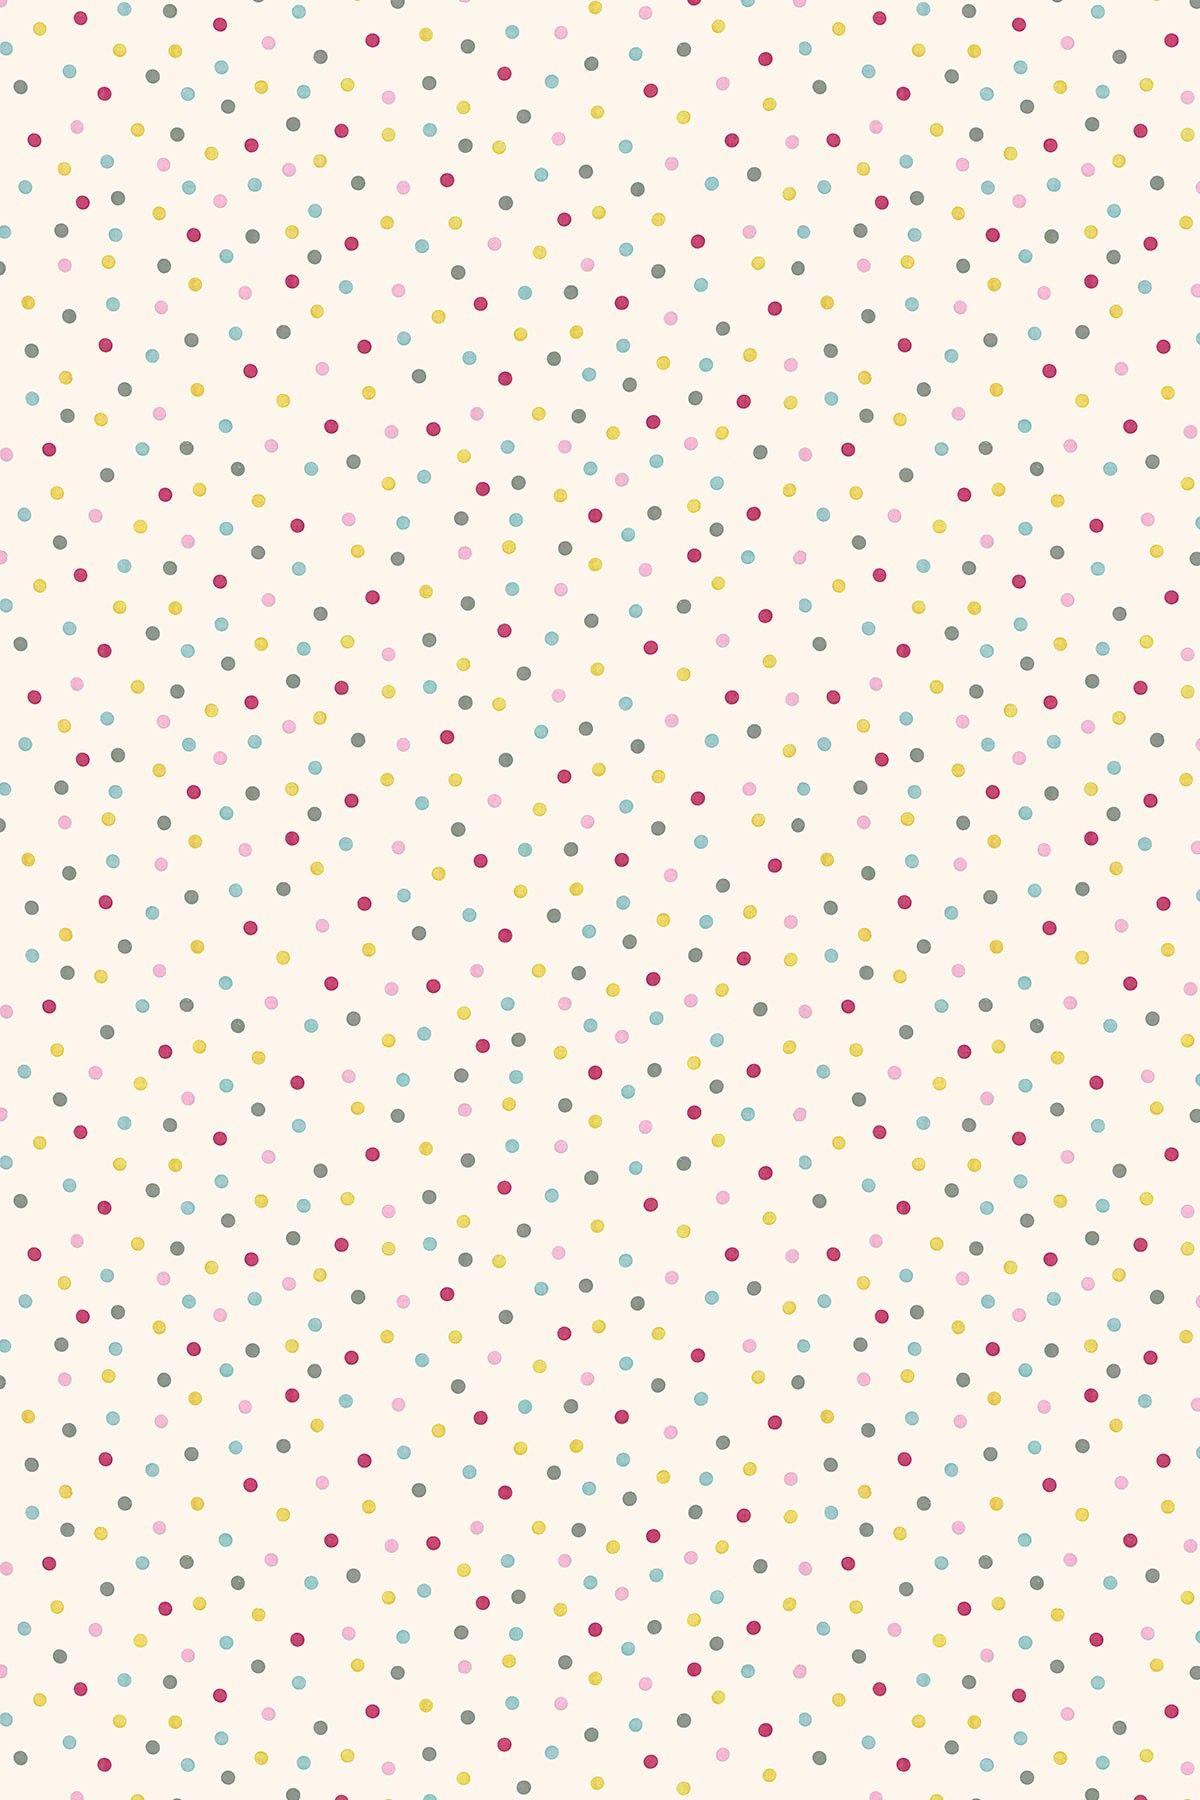 Black Polka Dots on White iPhone Wallpaper